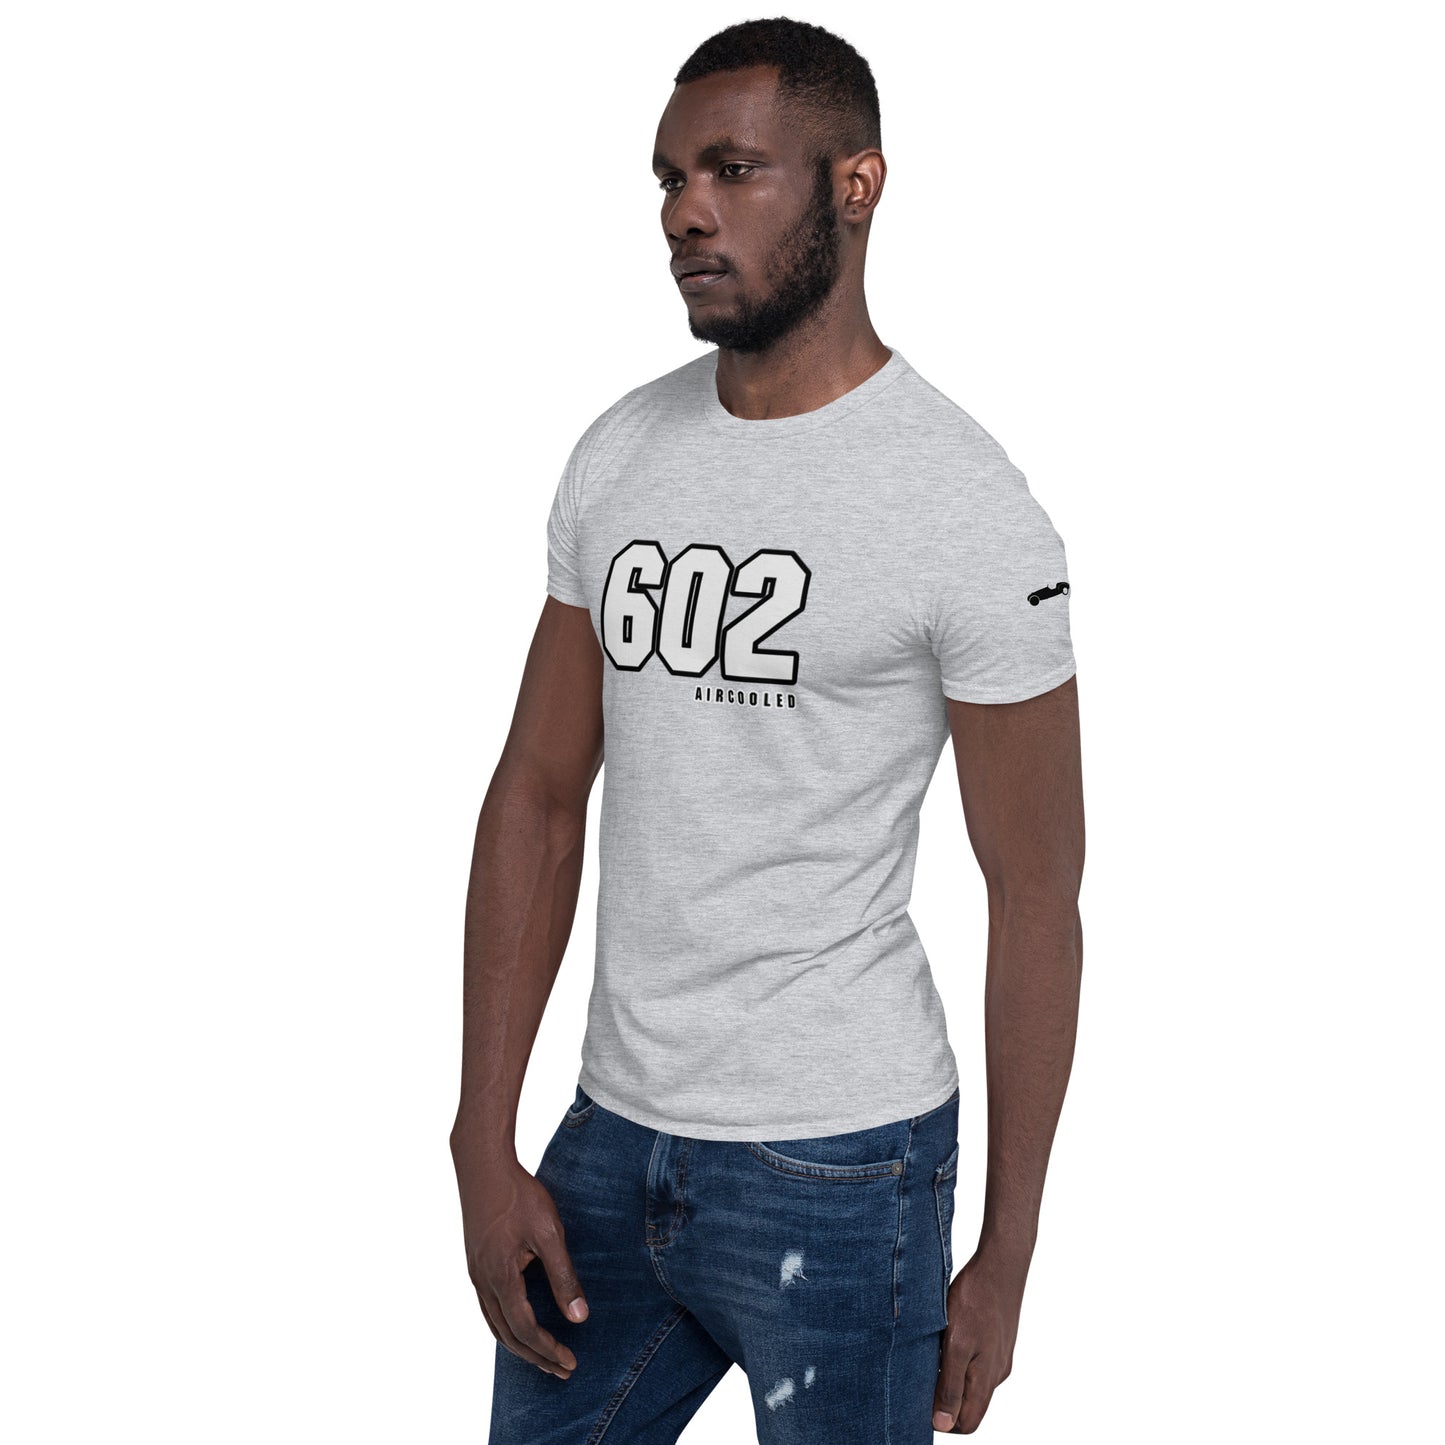 602cc Aircooled Burton Sportscar T-shirt Unisexe - Gris ou Blanc